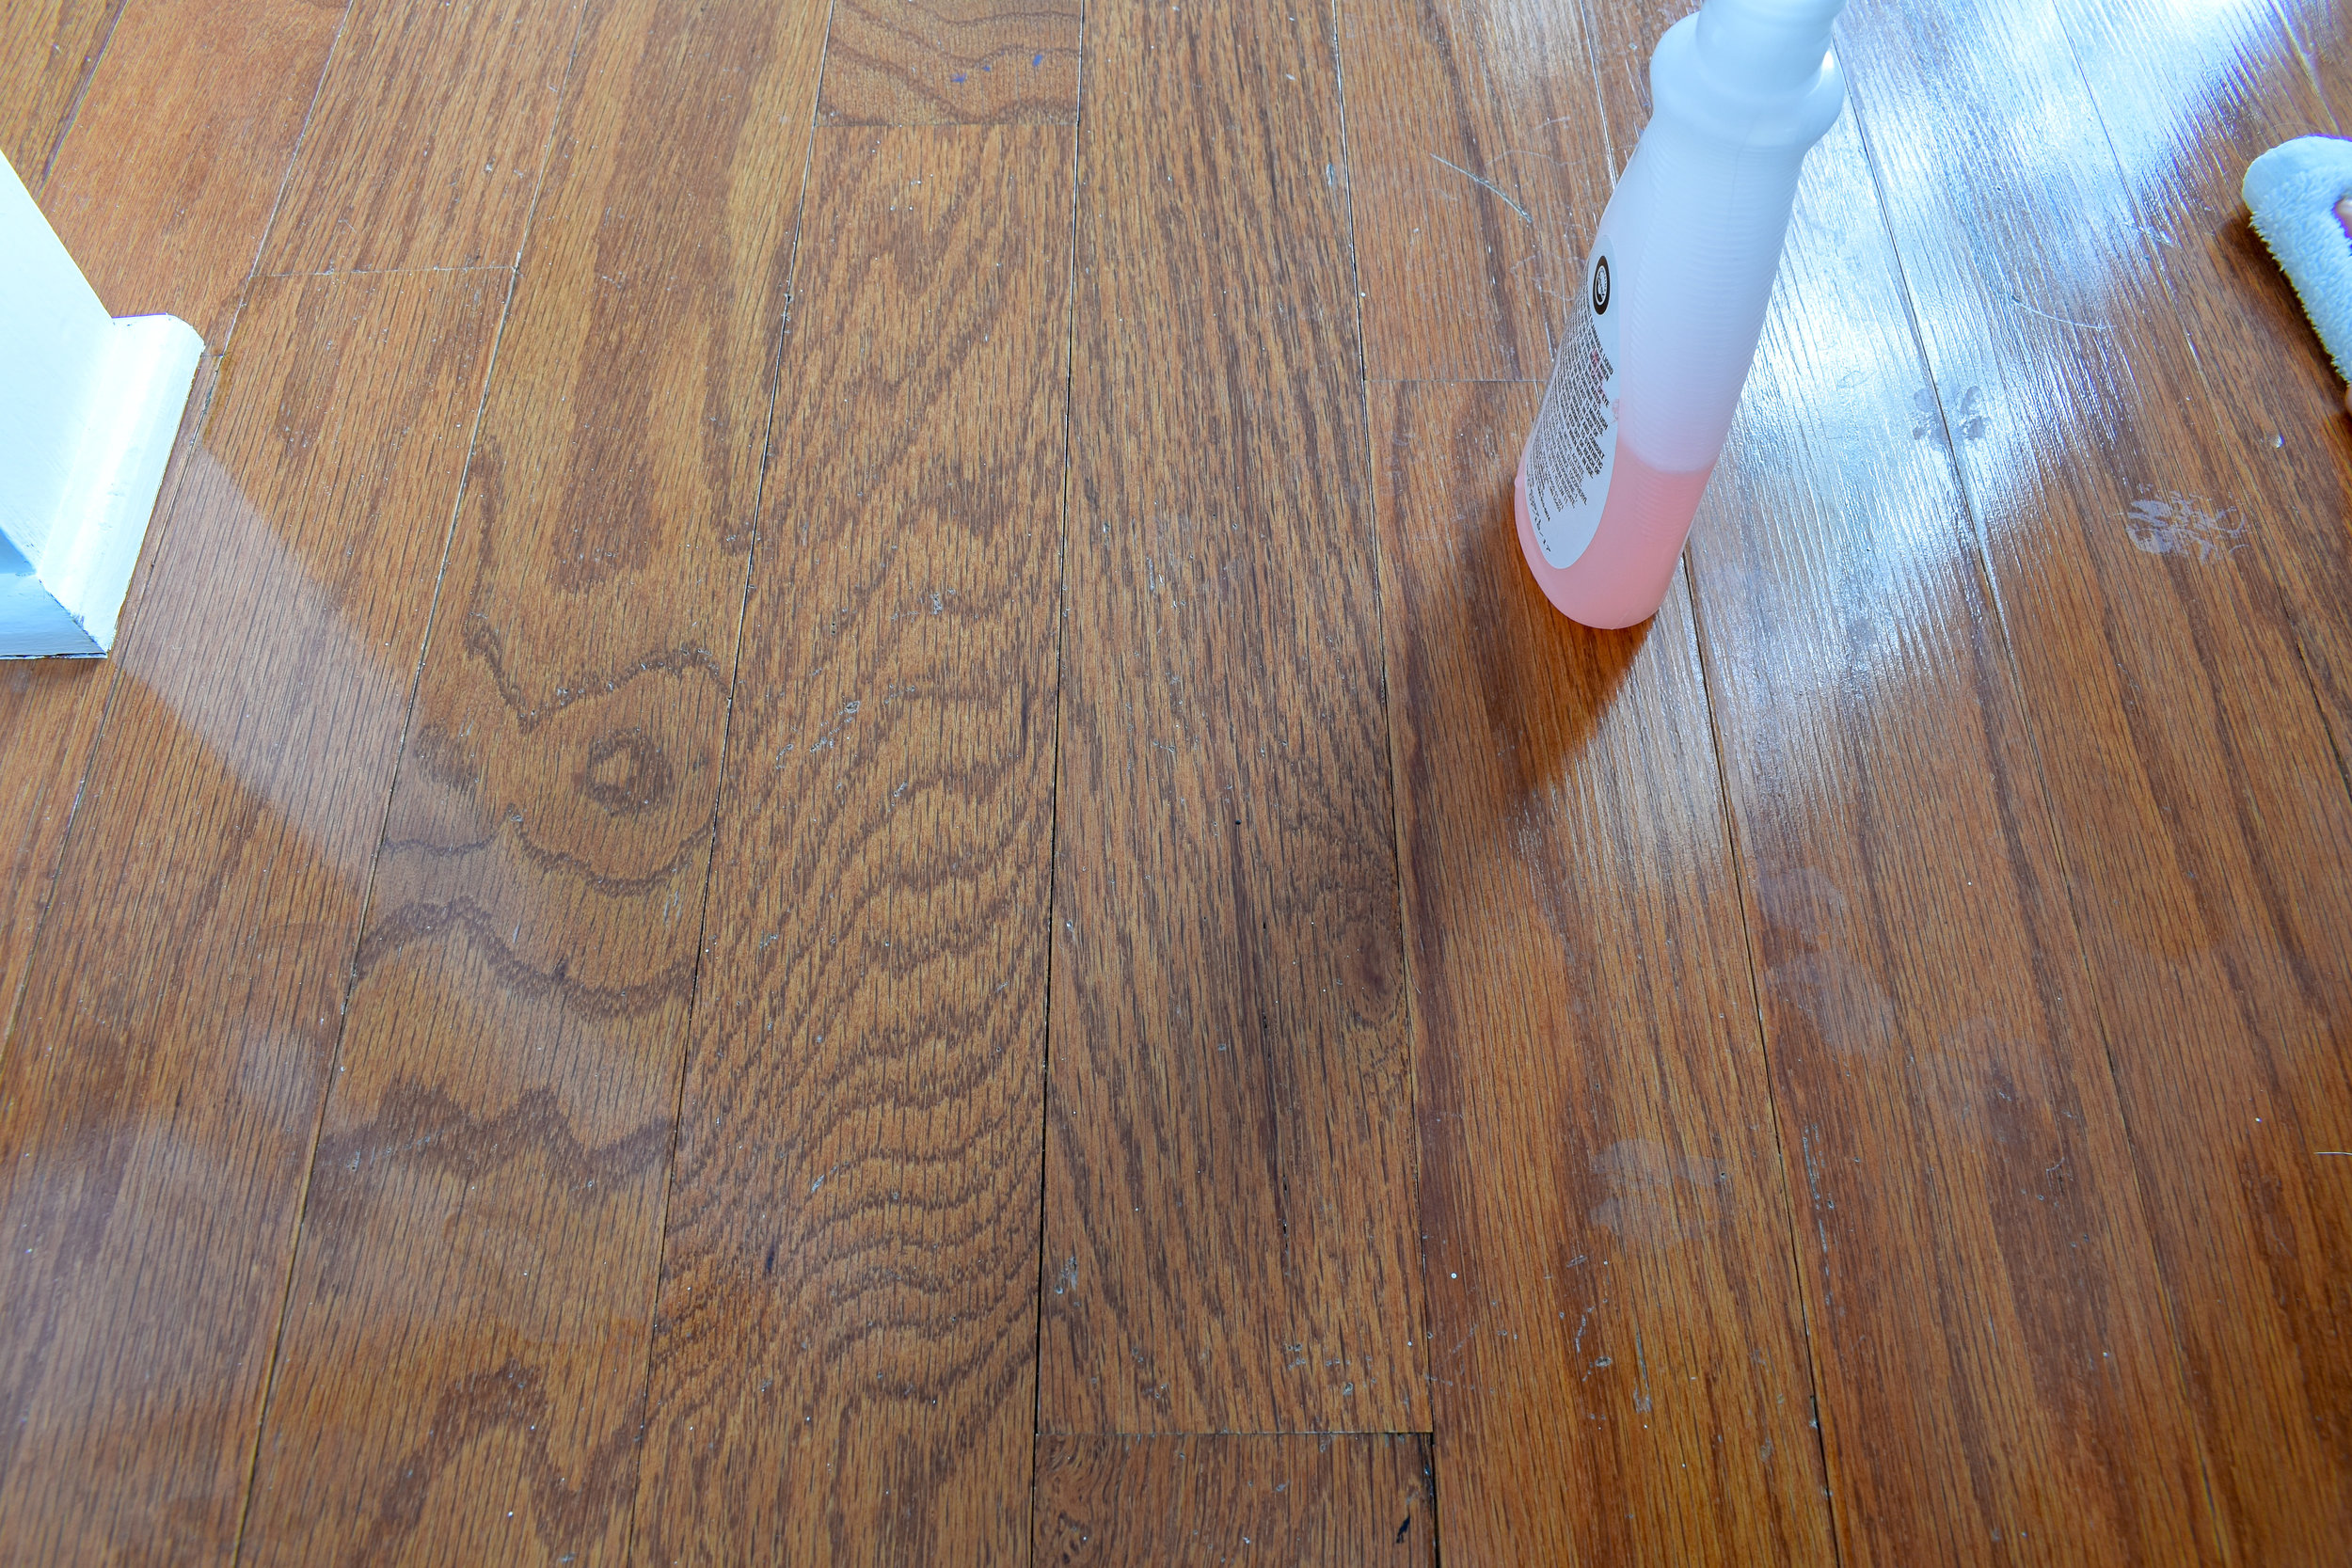 How To Make Old Hardwood Floors Shine, How To Bring Back Shine To Hardwood Floors